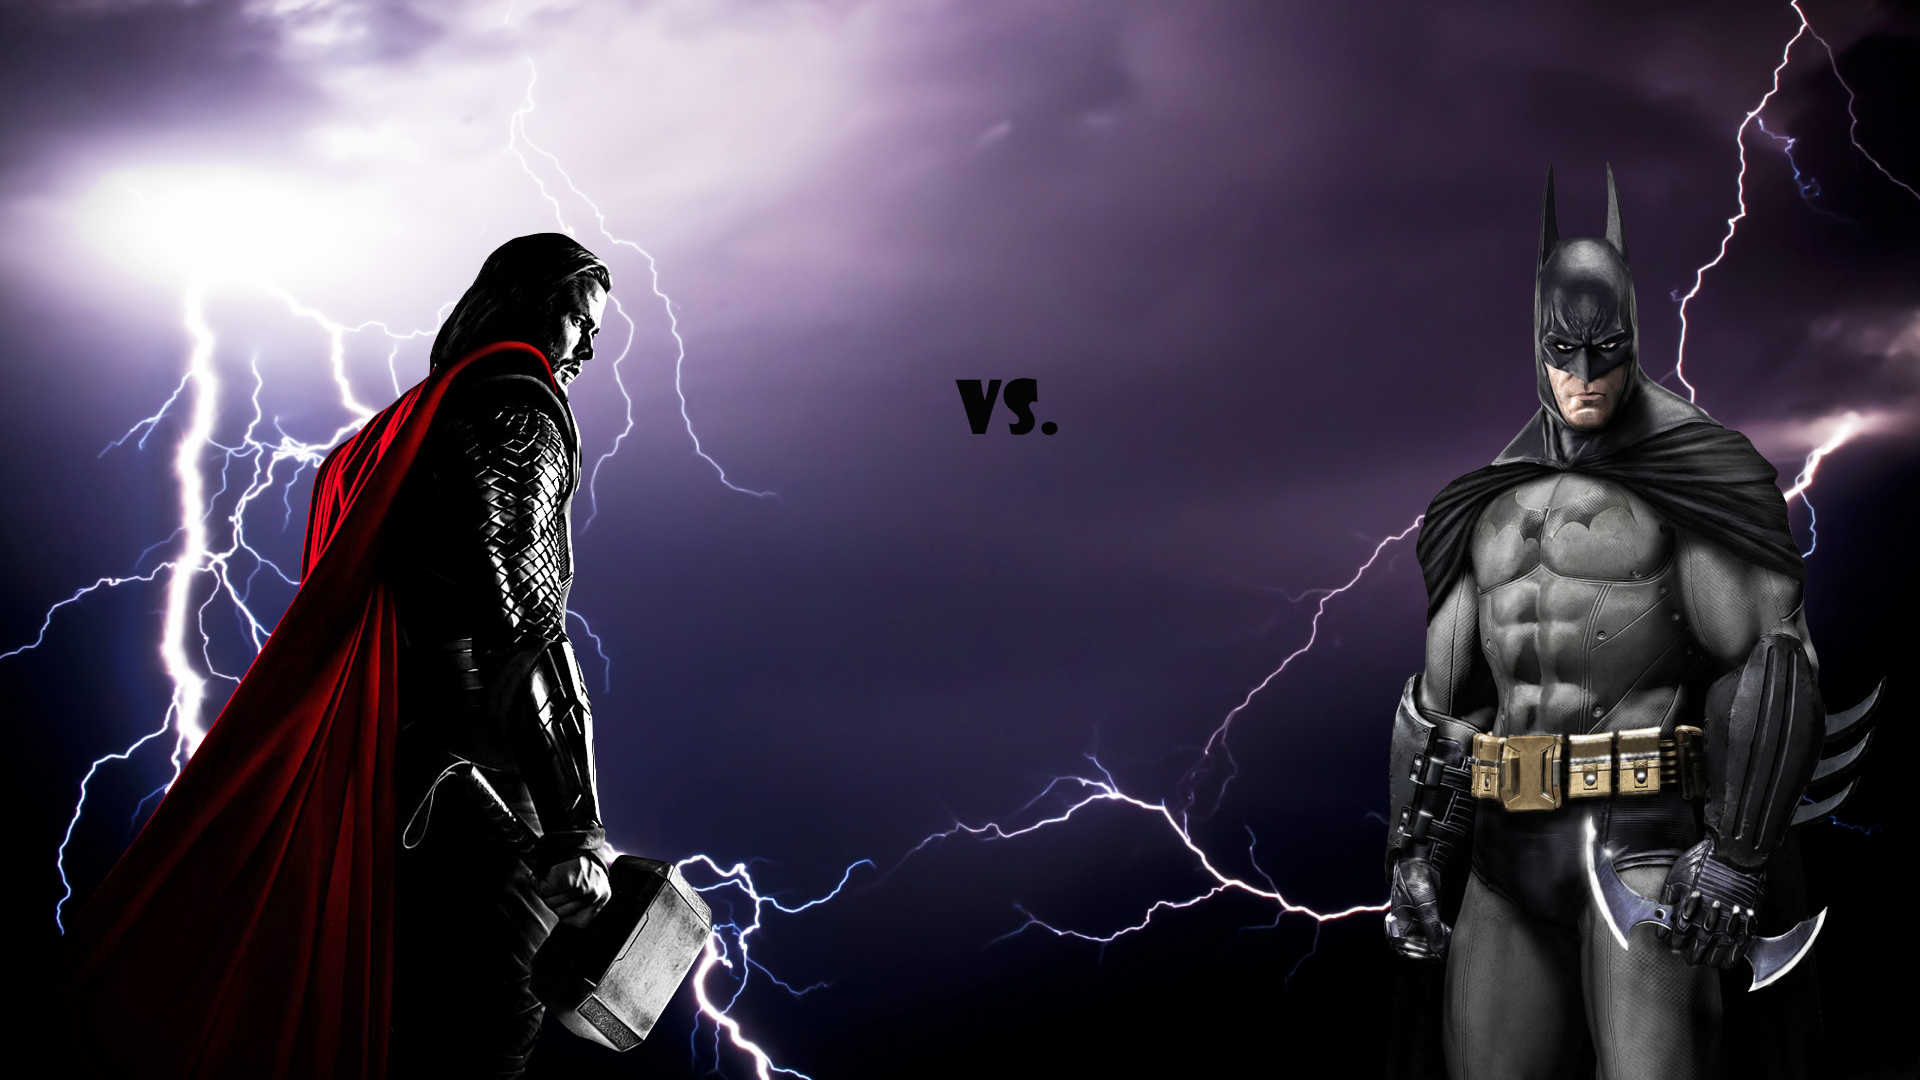 Thor vs. Batman by marindusevic on DeviantArt